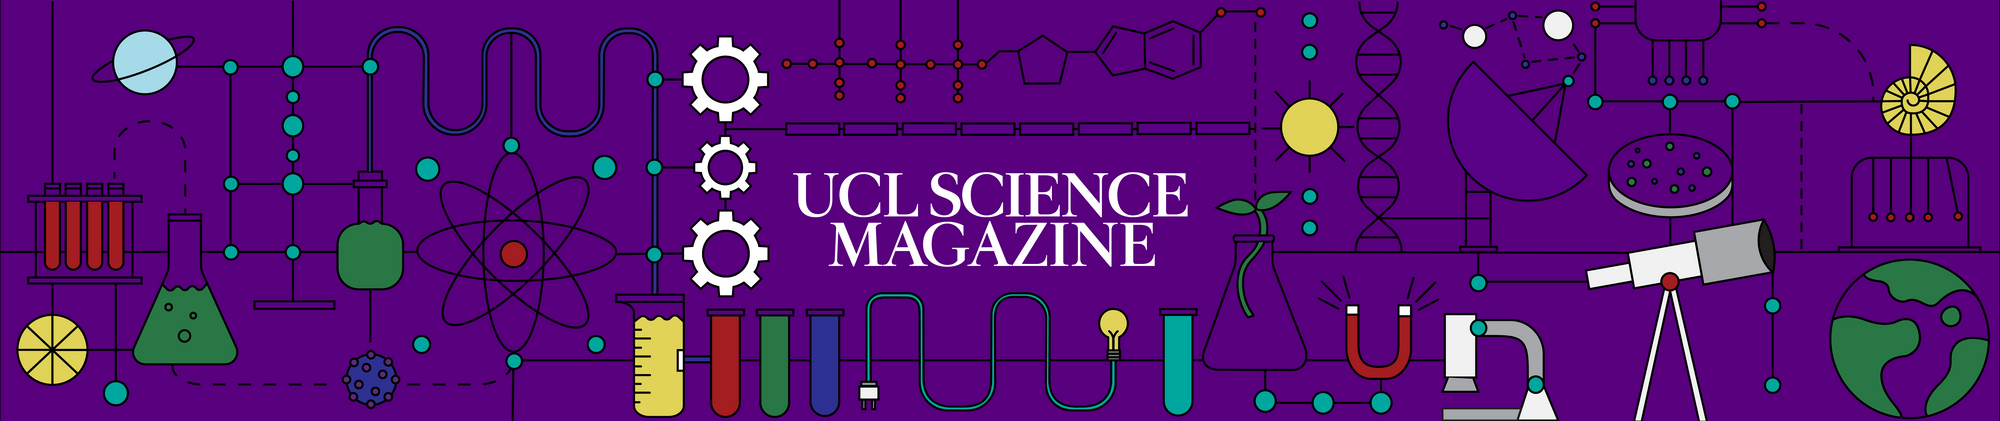 UCL Science Magazine 